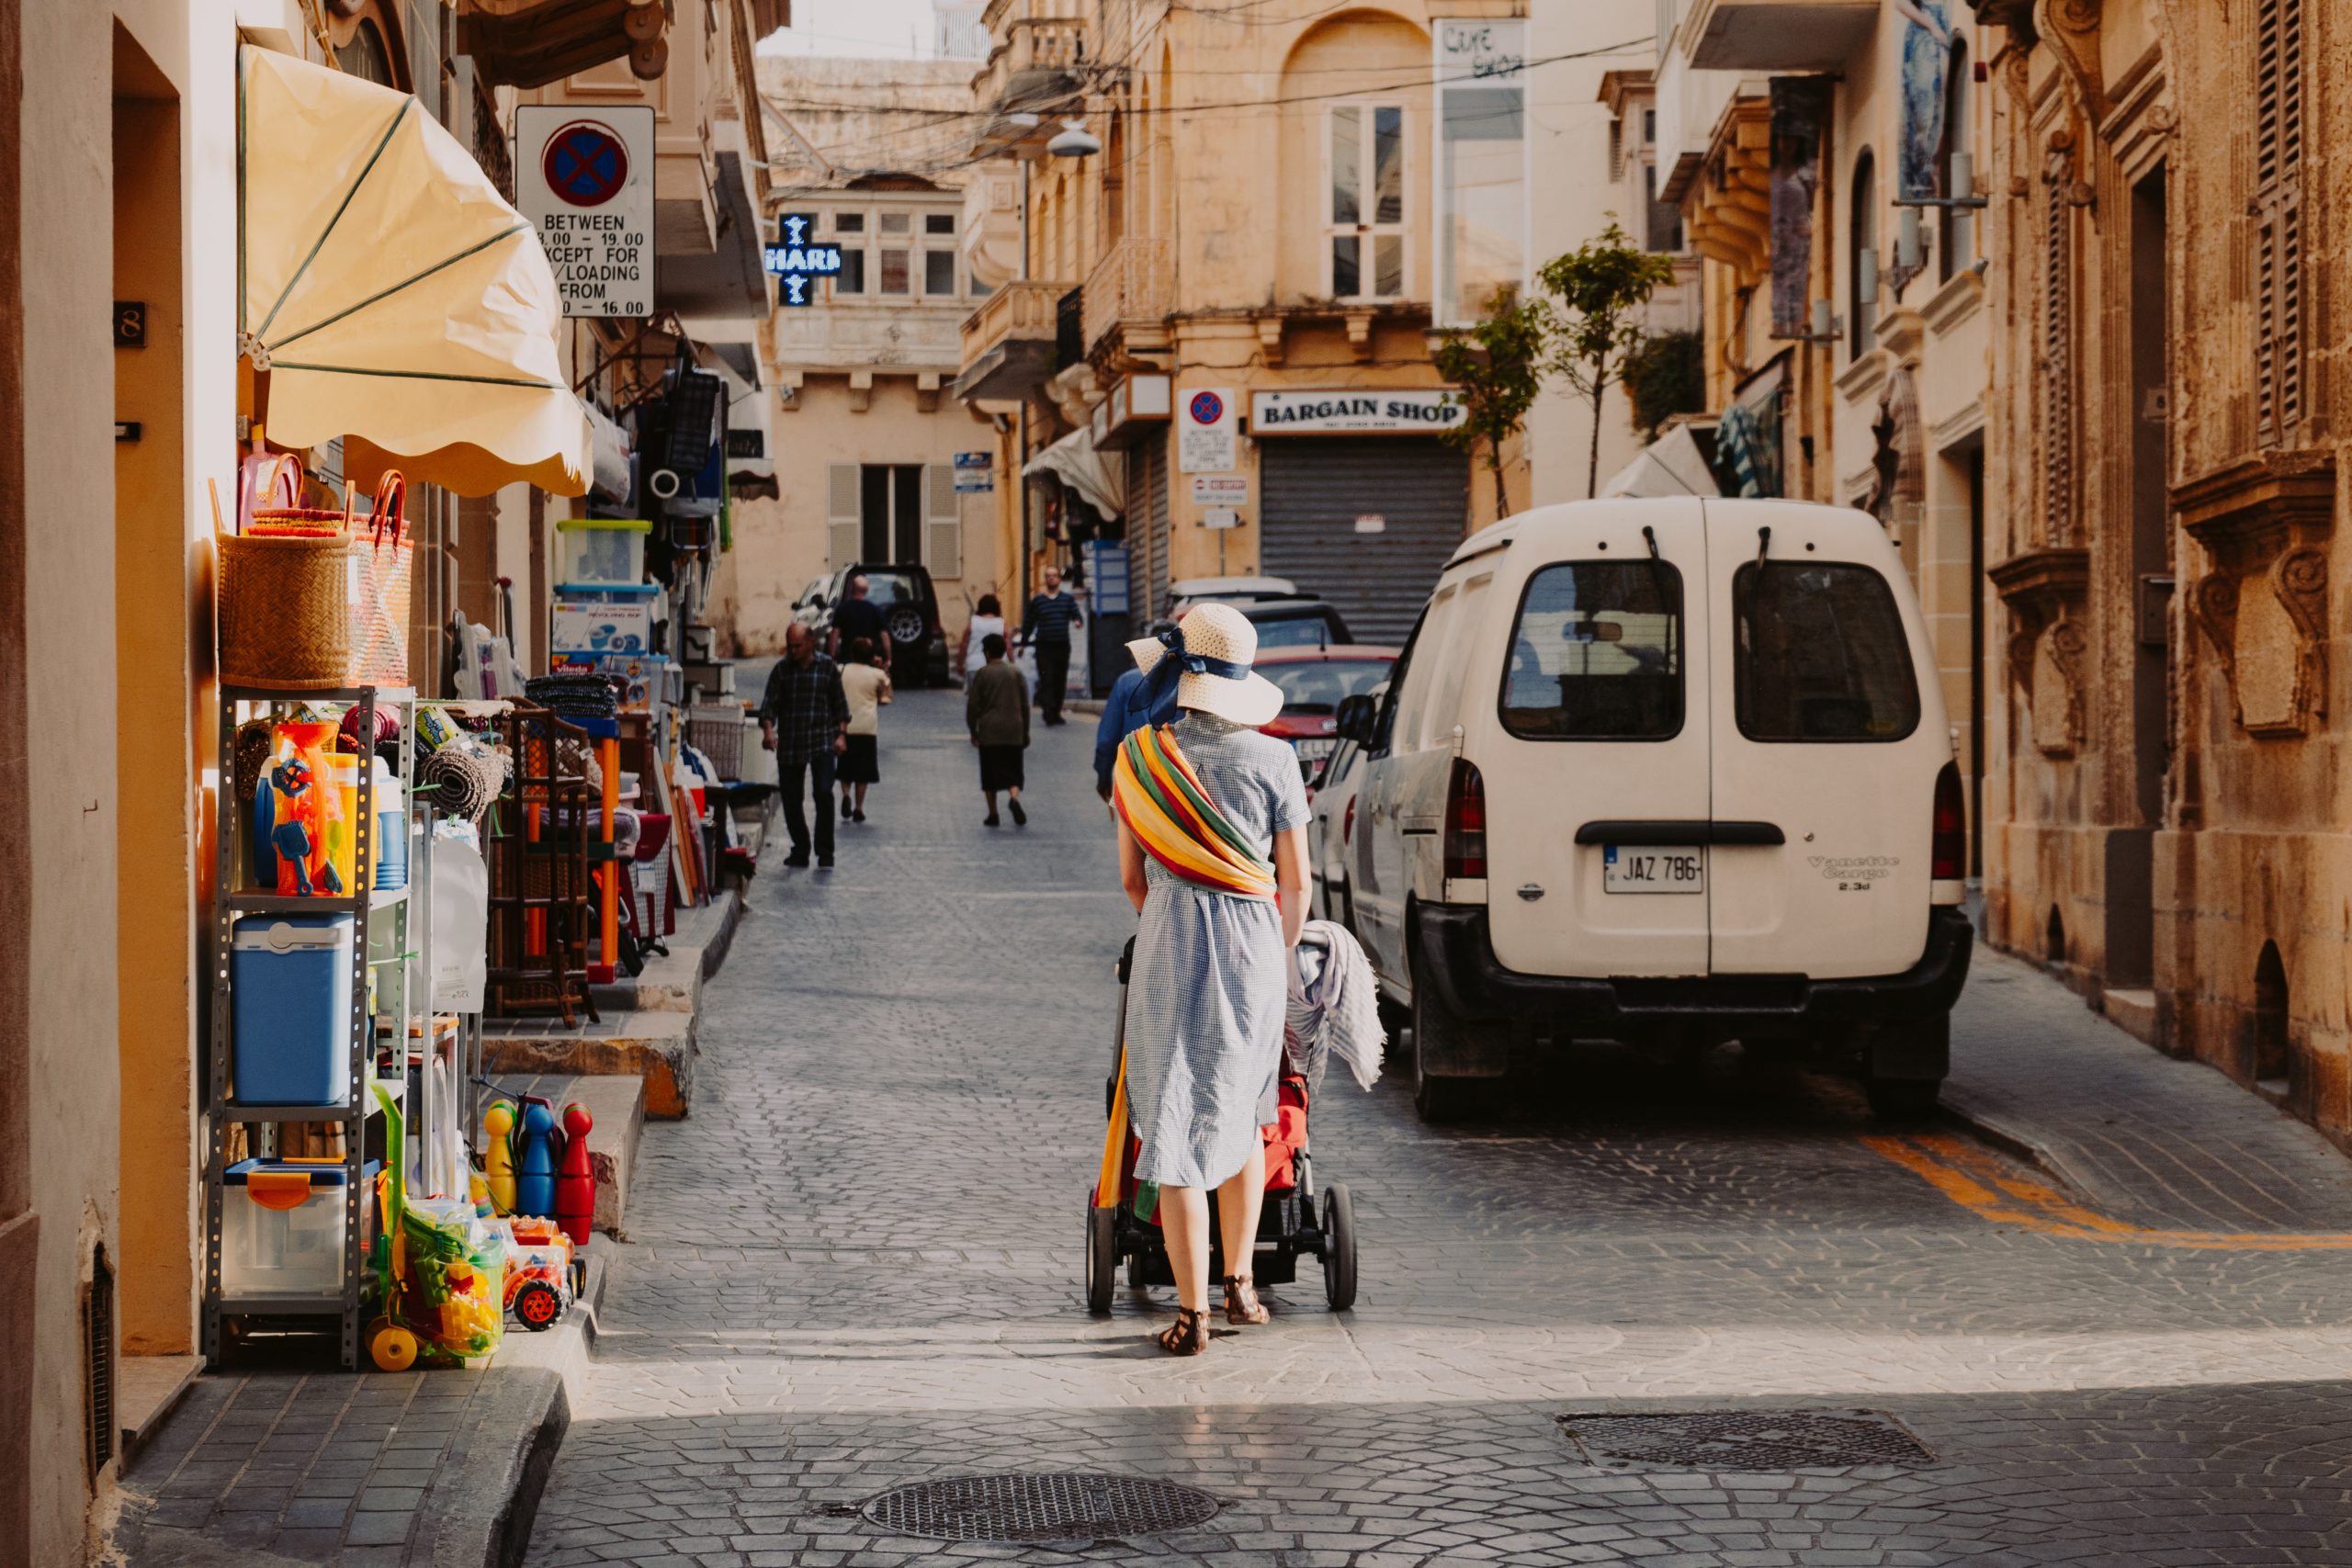 Locals on the Street in Malta